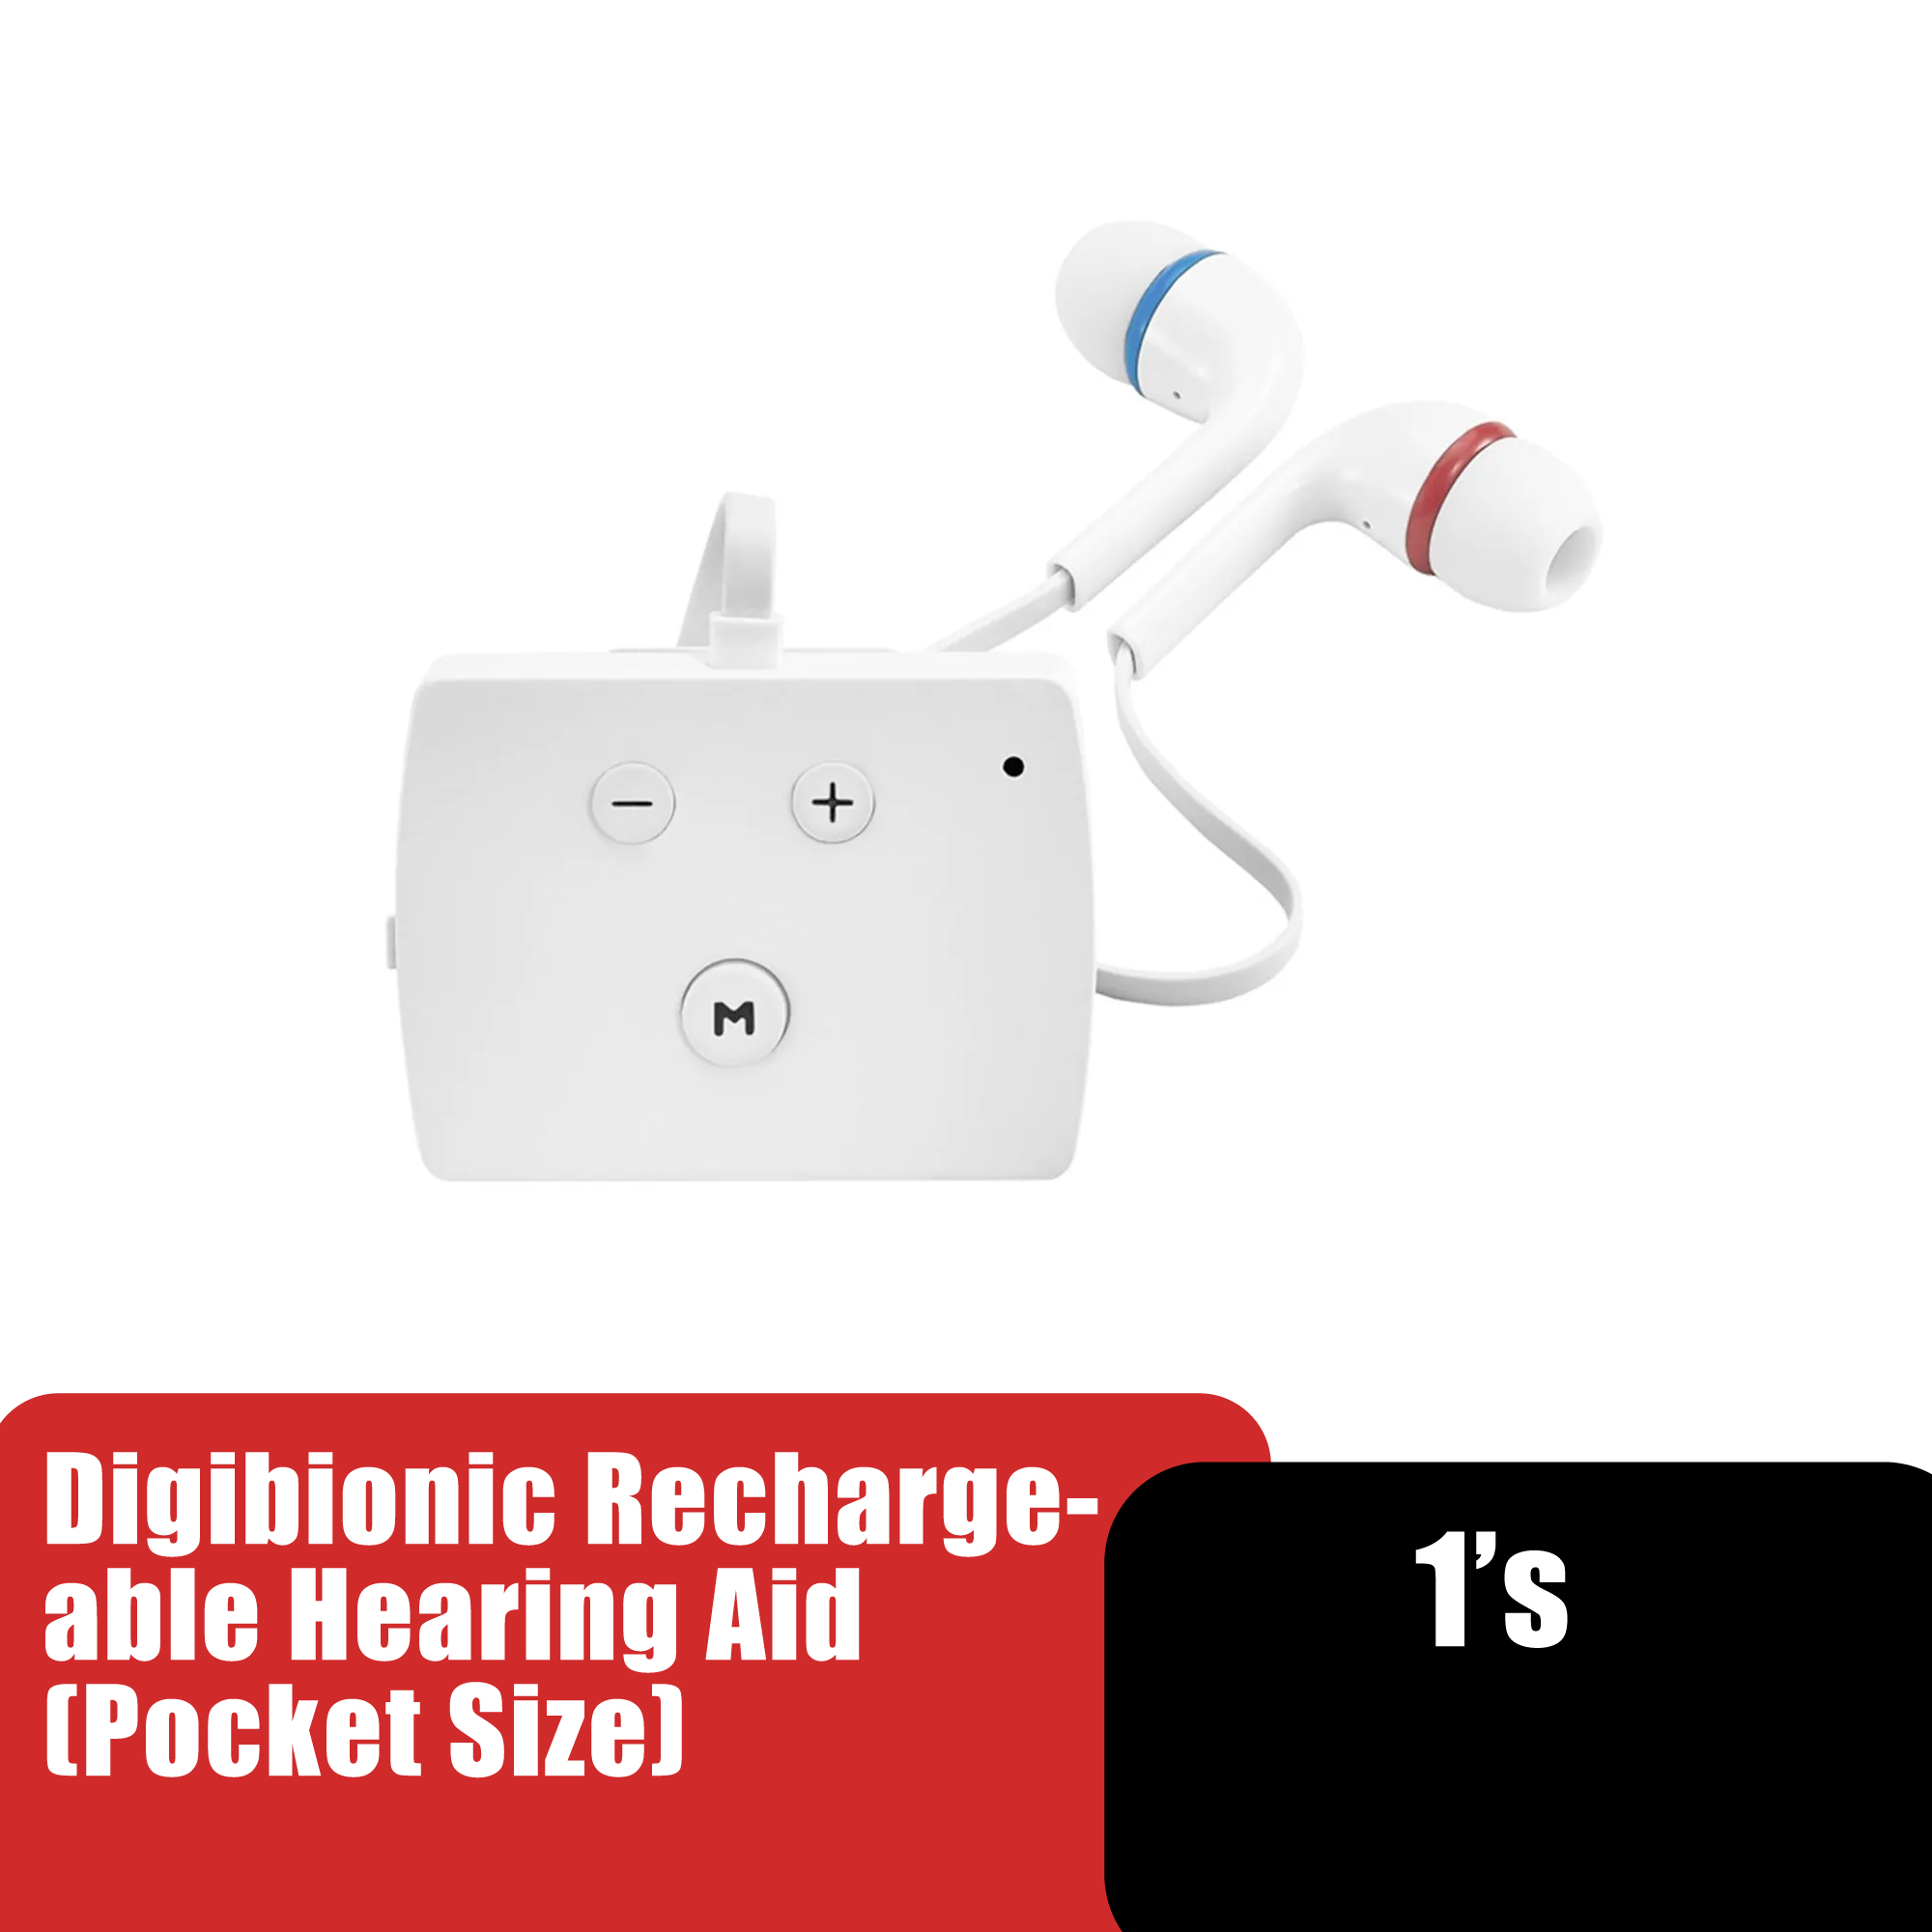 DIGIBIONIC Rechargeable Hearing Aid, Ear Aid Machine, Bantuan Pendengaran, Alat Bantu Dengar (助听器) Pocket Size - UP-6e52